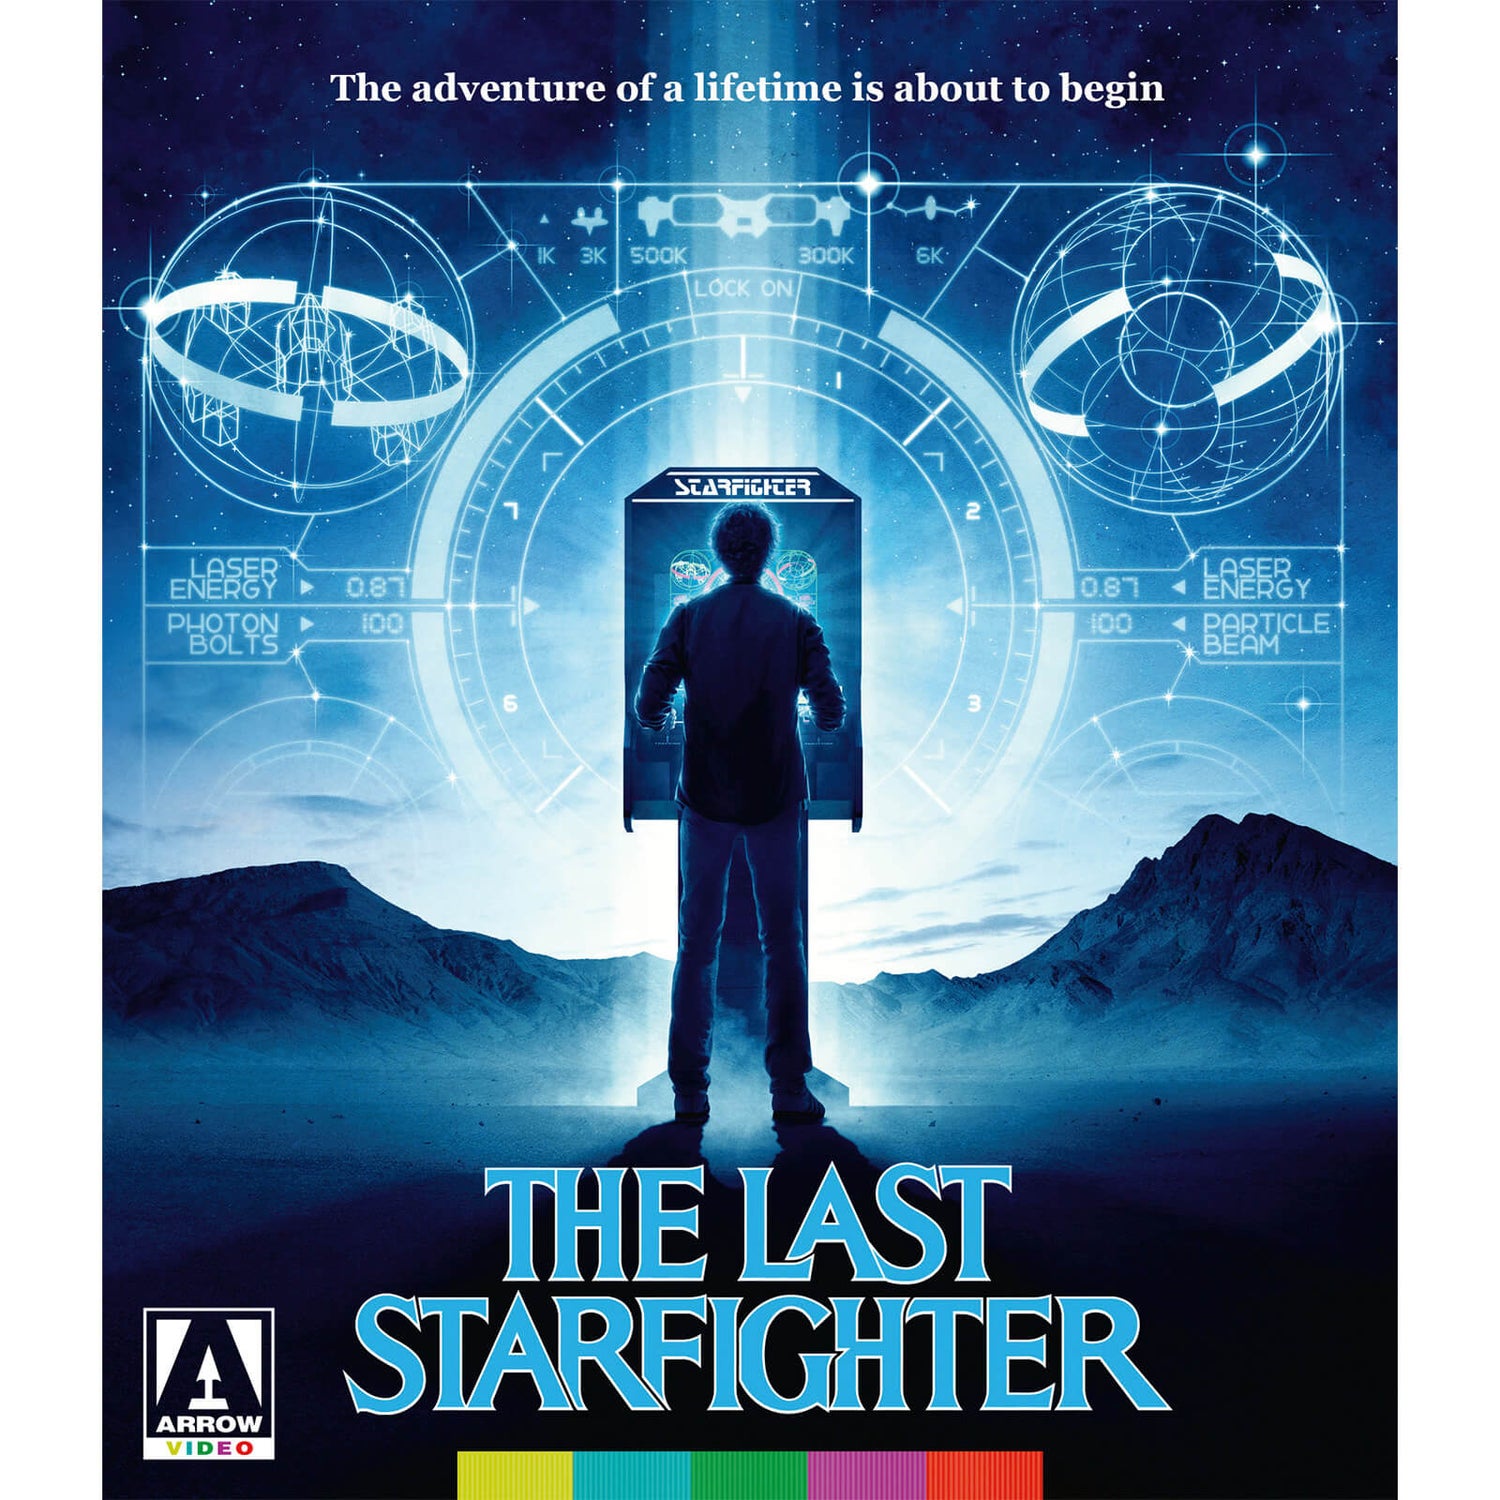 The Last Starfighter Blu-ray